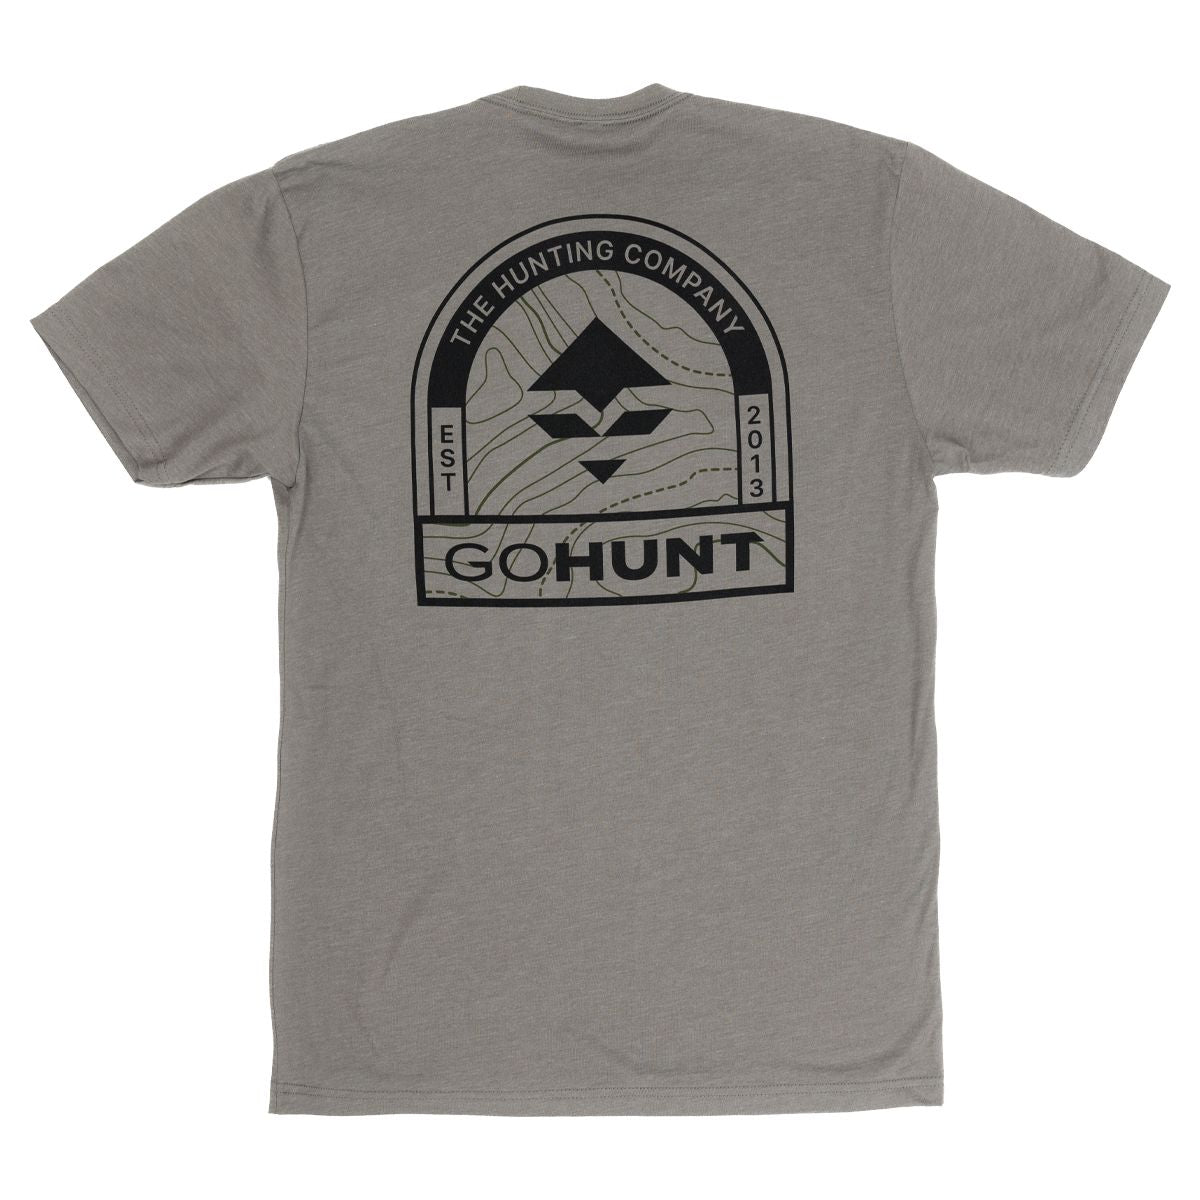 GOHUNT Elevation Tee in Warm Gray by GOHUNT | GOHUNT - GOHUNT Shop